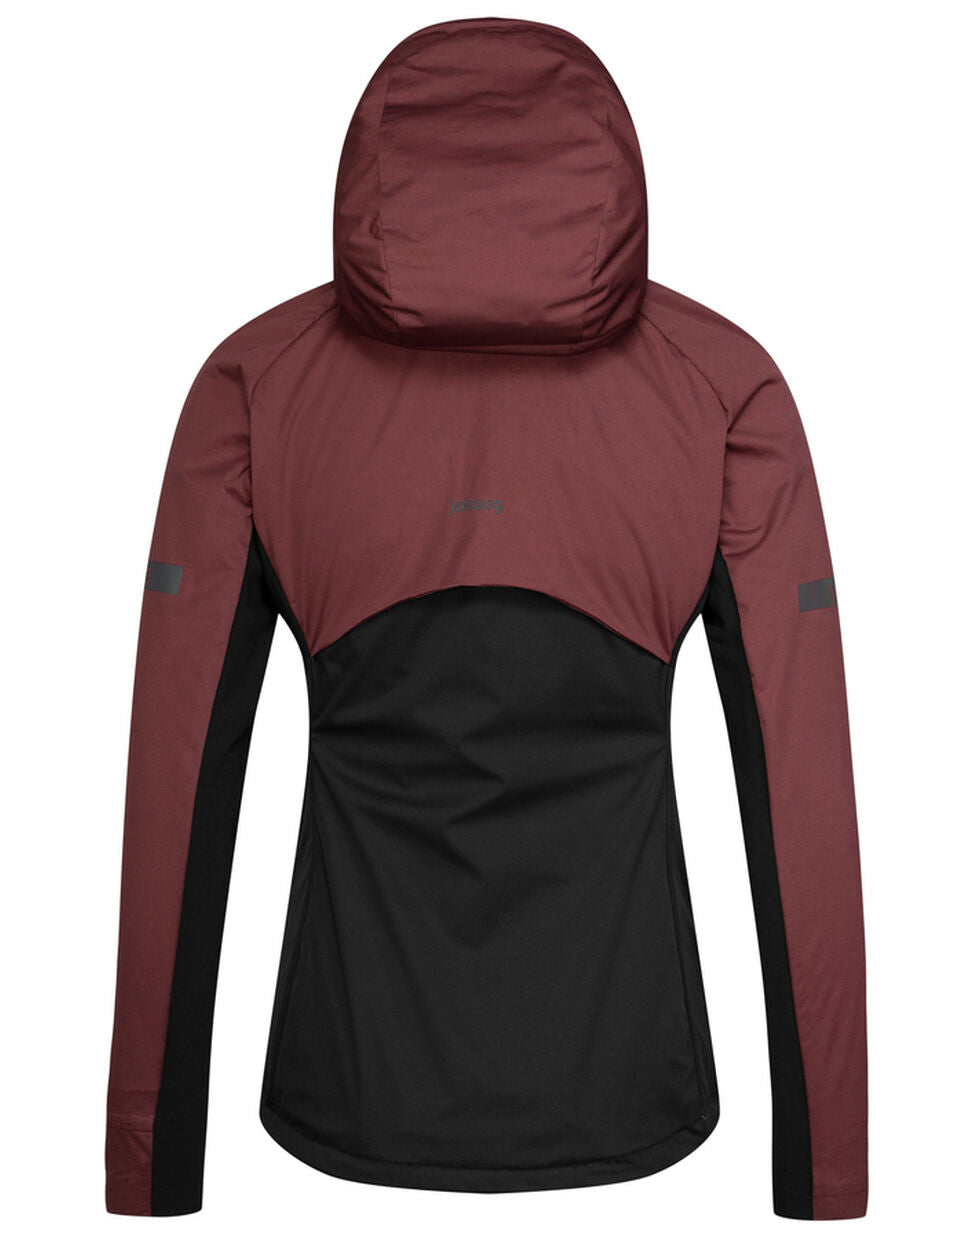 Johaug Concept Jacket